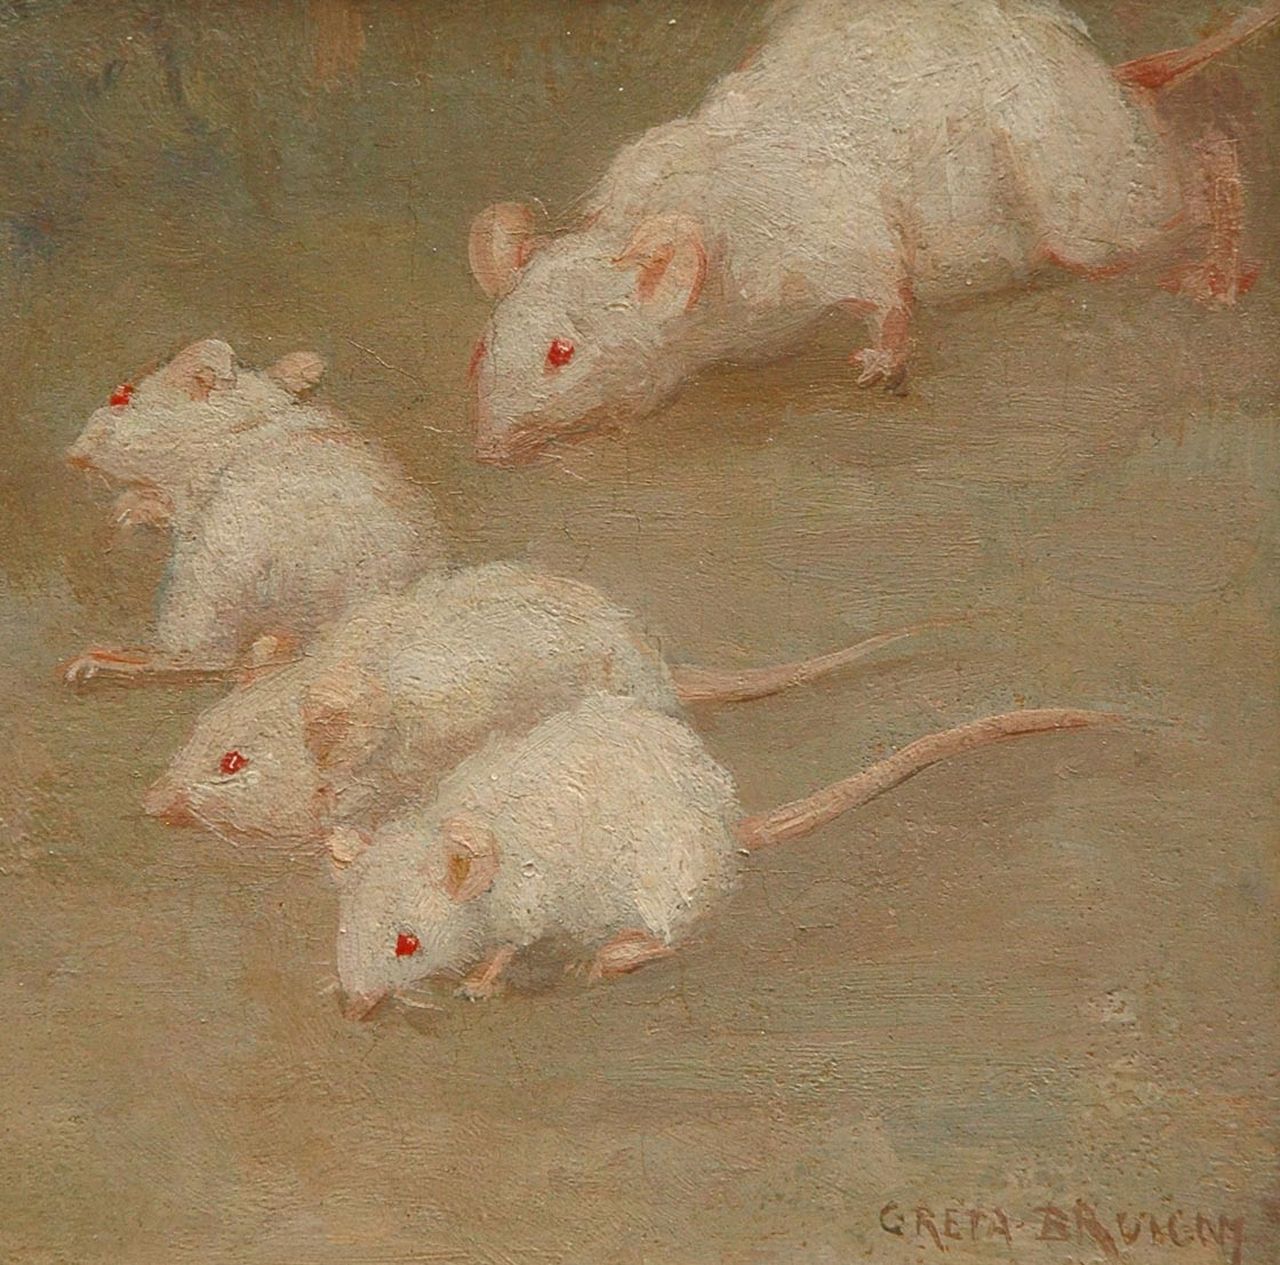 Bruigom M.C.  | Margaretha Cornelia 'Greta' Bruigom, Witte muisjes, olieverf op paneel 13,1 x 12,9 cm, gesigneerd rechtsonder